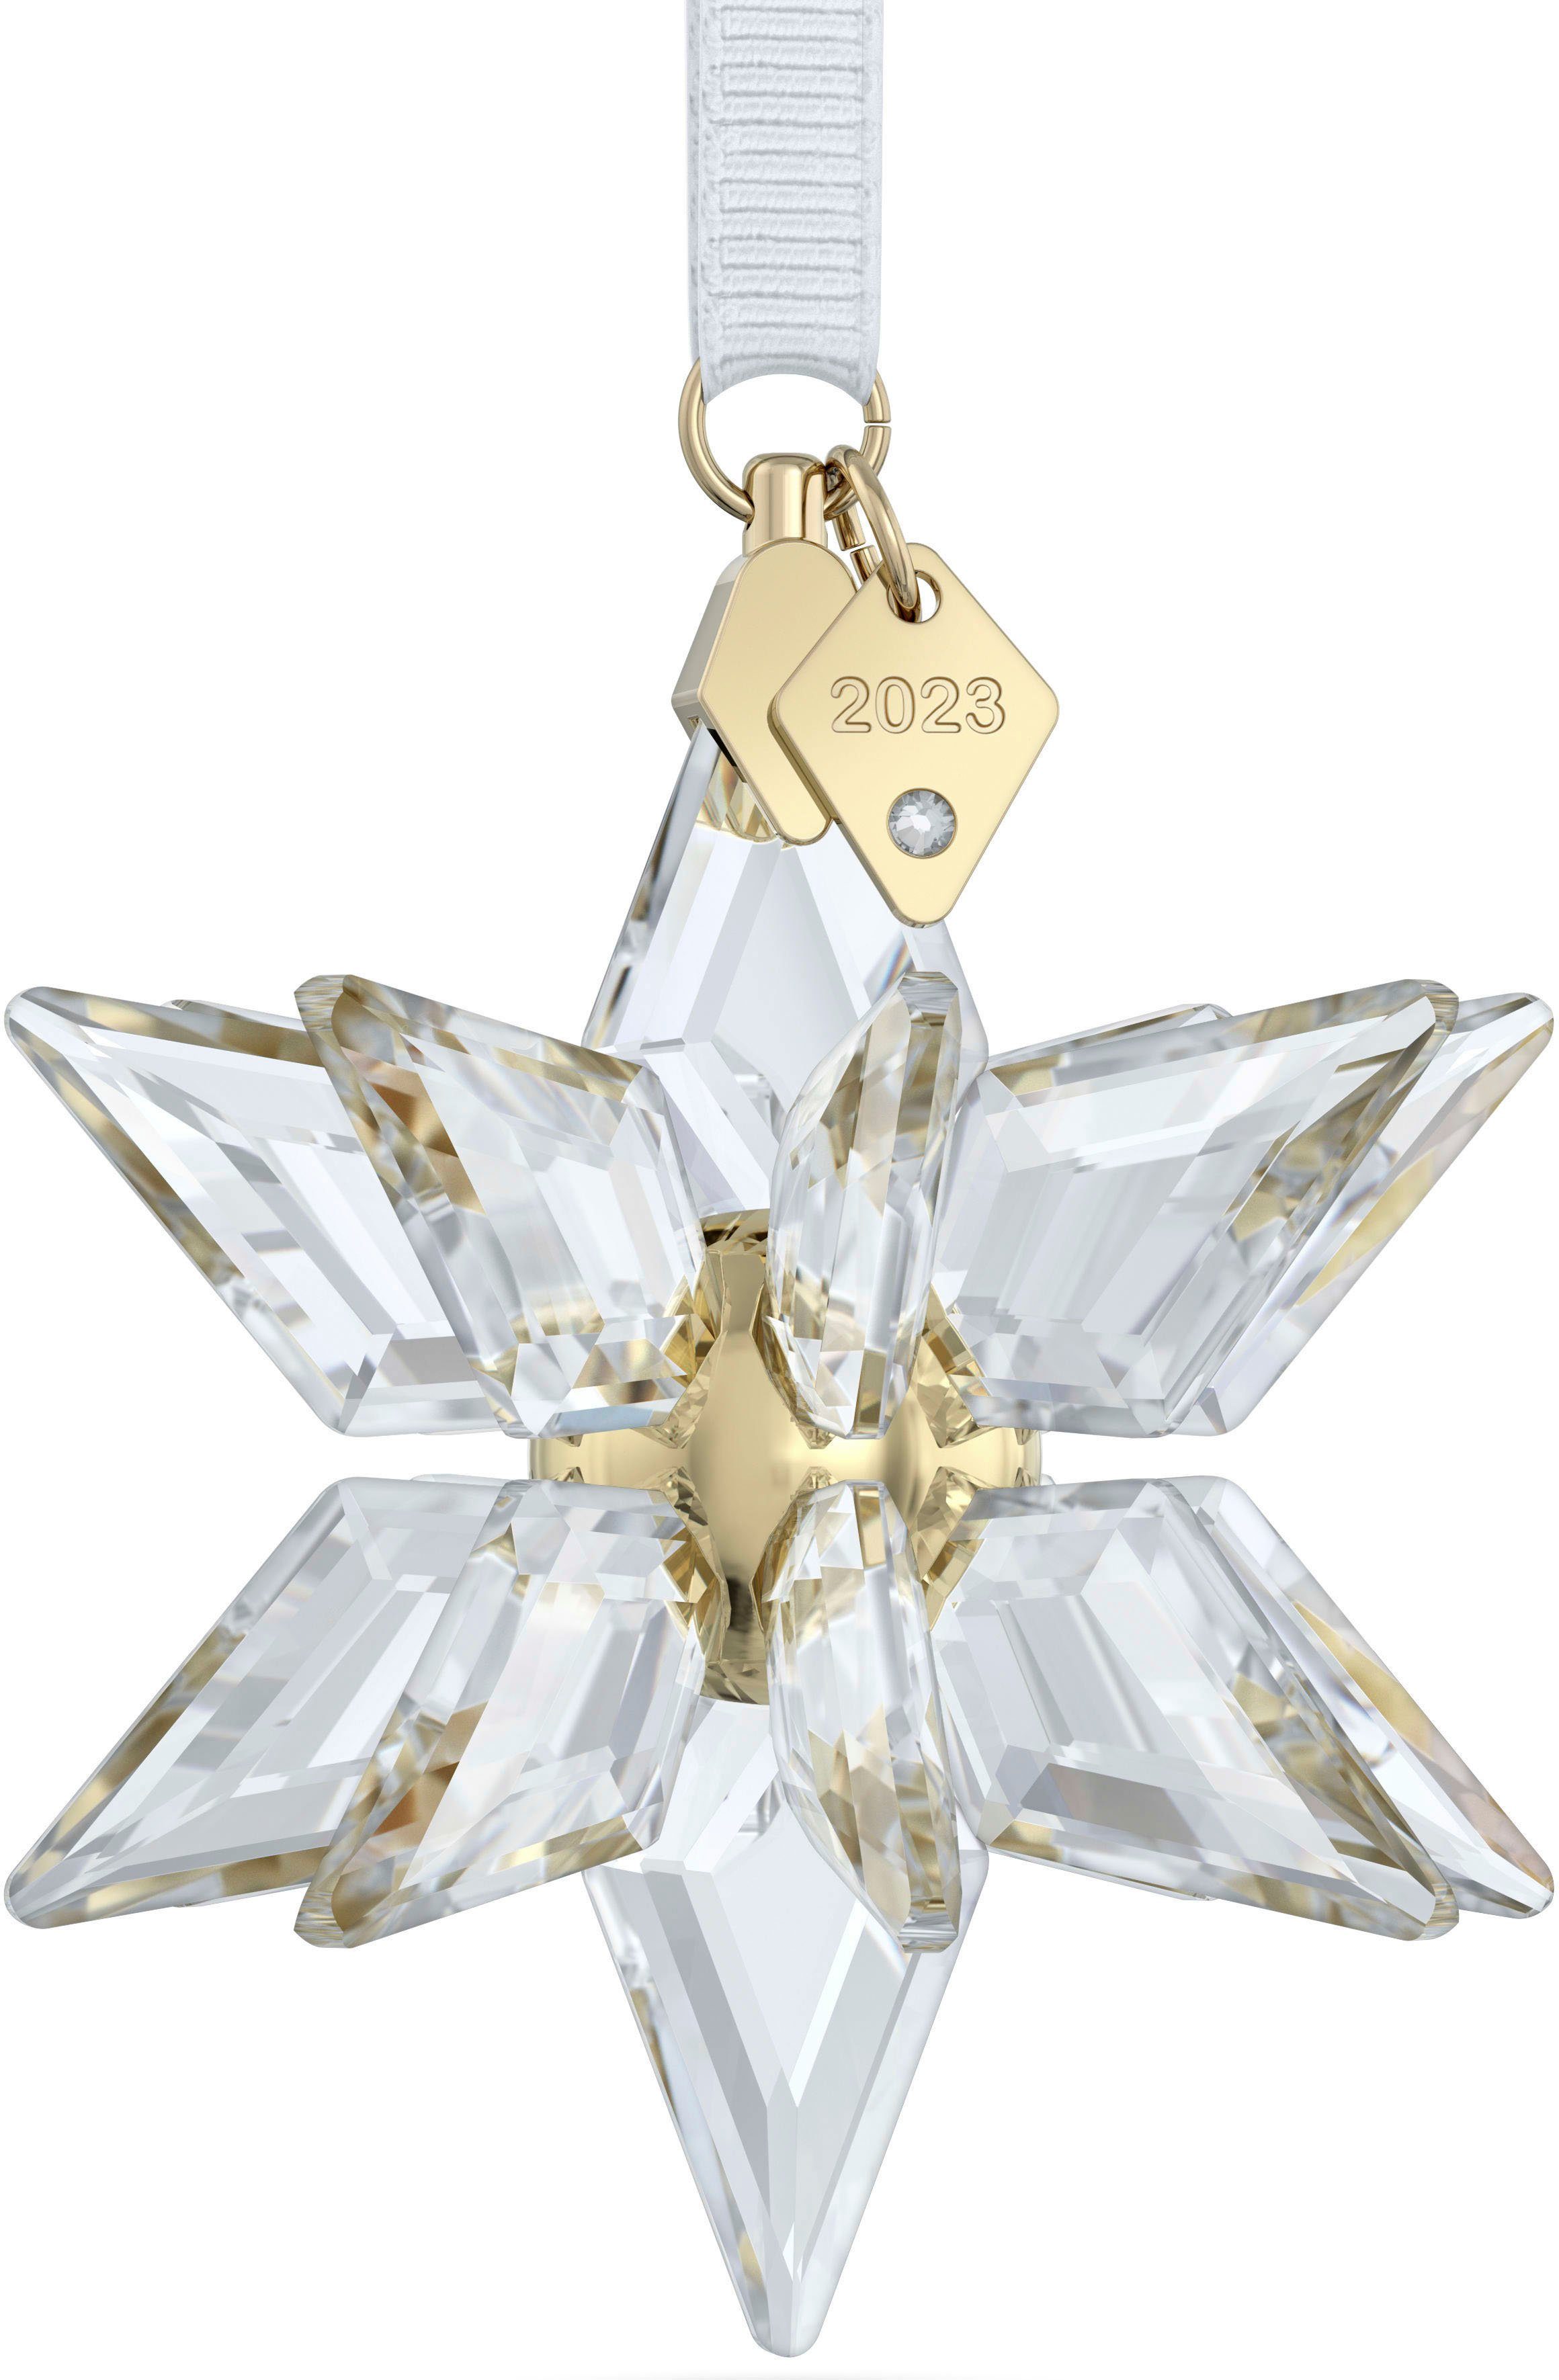 Swarovski Dekohänger ORNAMENT FESTIVE 3D kristallweiß-goldfarben-weiß 5651397, 5653577 2023, (1 Kristall Swarovski® St)